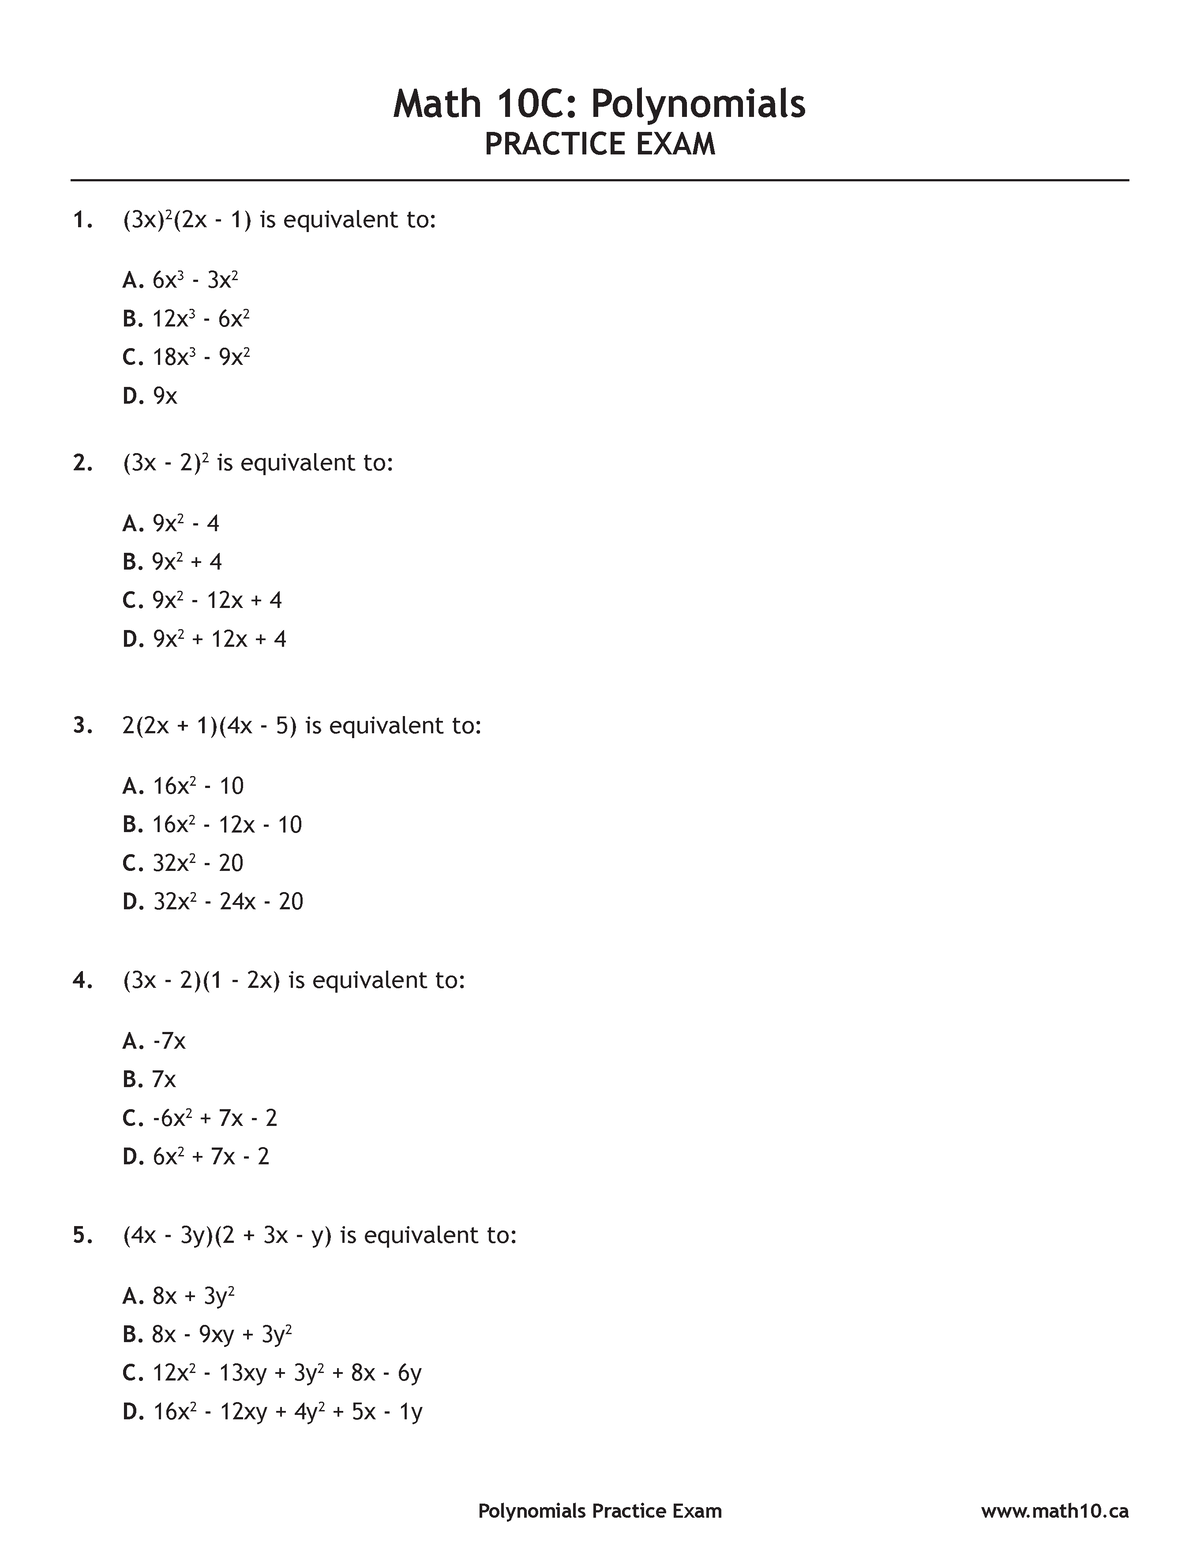 gr-10-factoring-polynomials-practice-test-math-10c-polynomials